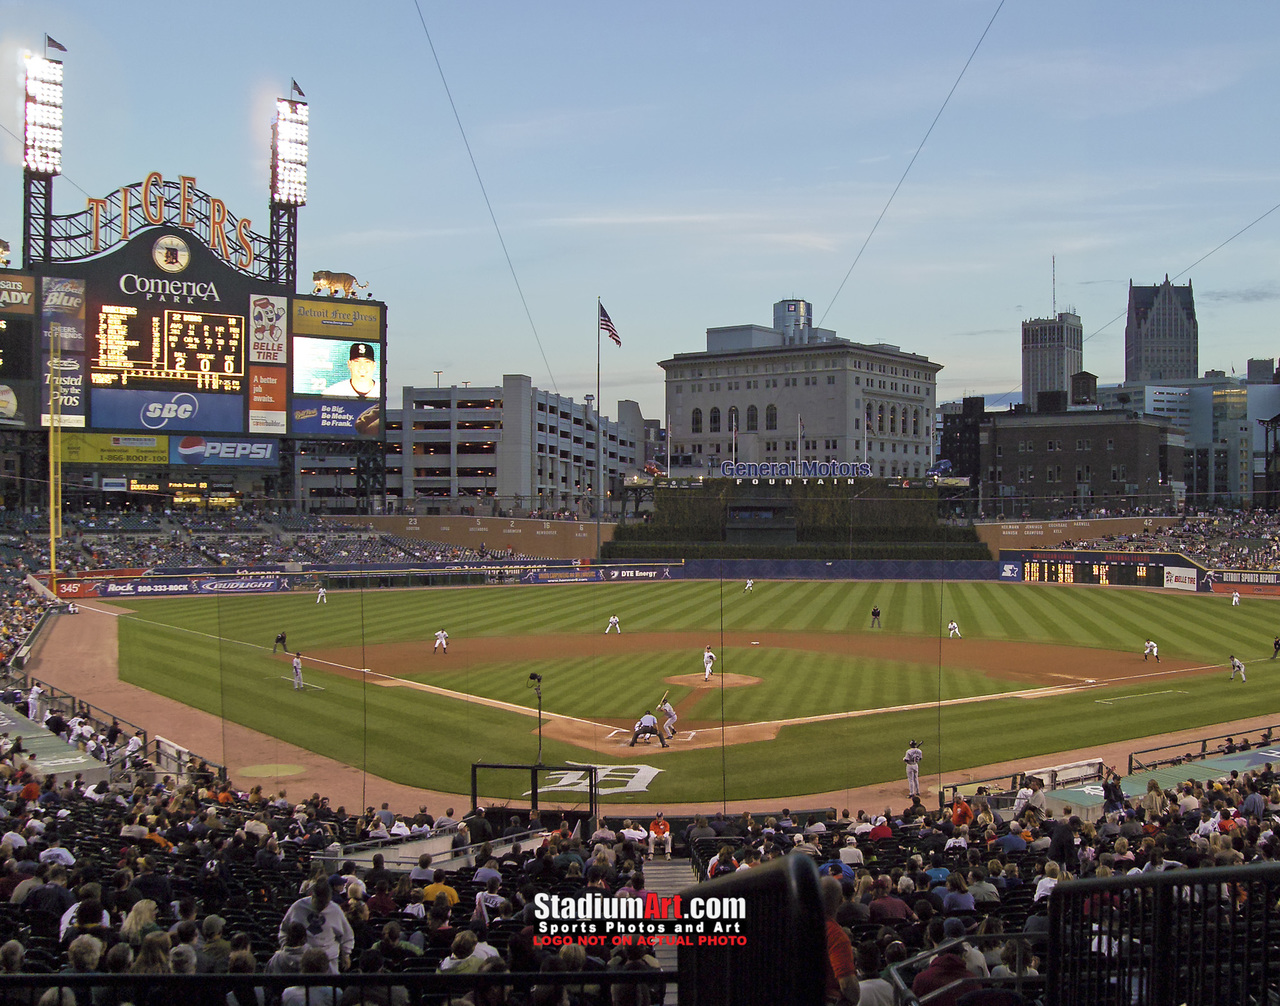 Detroit Tigers Comerica Park Baseball Stadium Photo Print 02 8x10-48x36